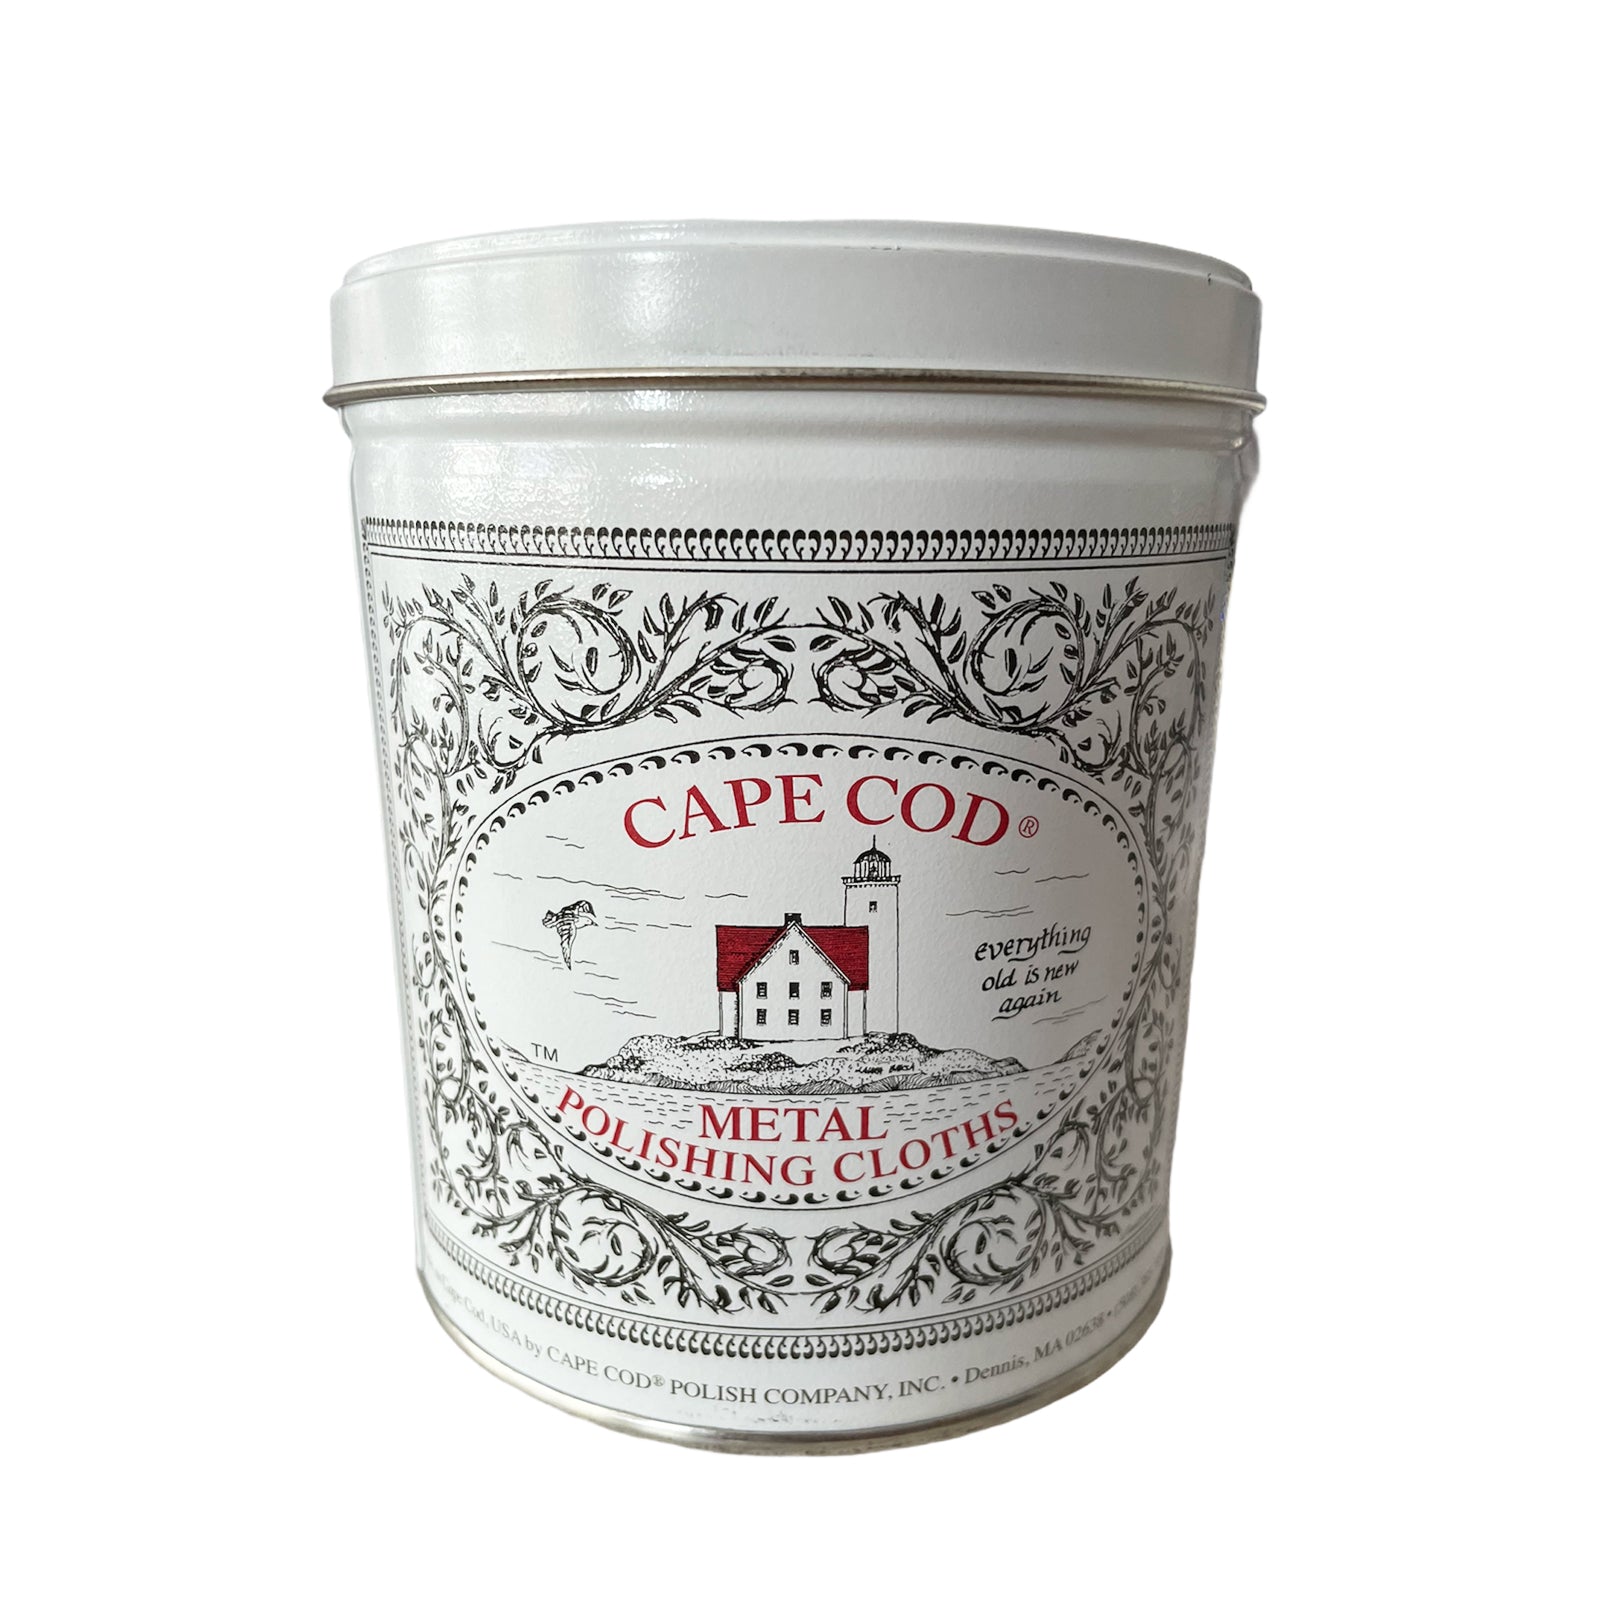 Cape Cod® Metal Polishing Cloths